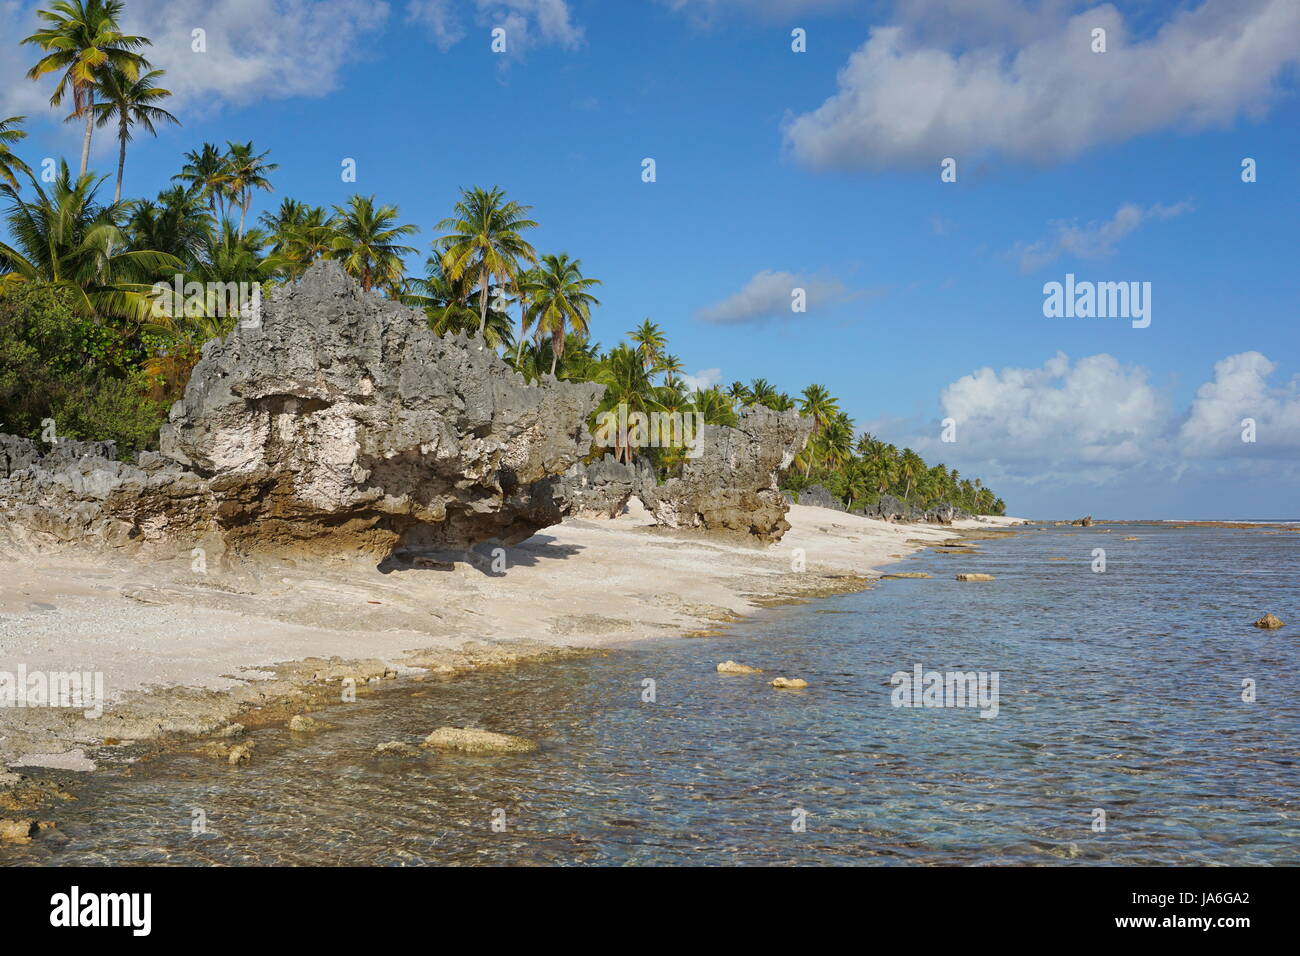 Atoll of Tikehau coastal landscape with coconut trees and eroded rocks on the seashore, Tuamotus archipelago, French Polynesia, Pacific ocean Stock Photo